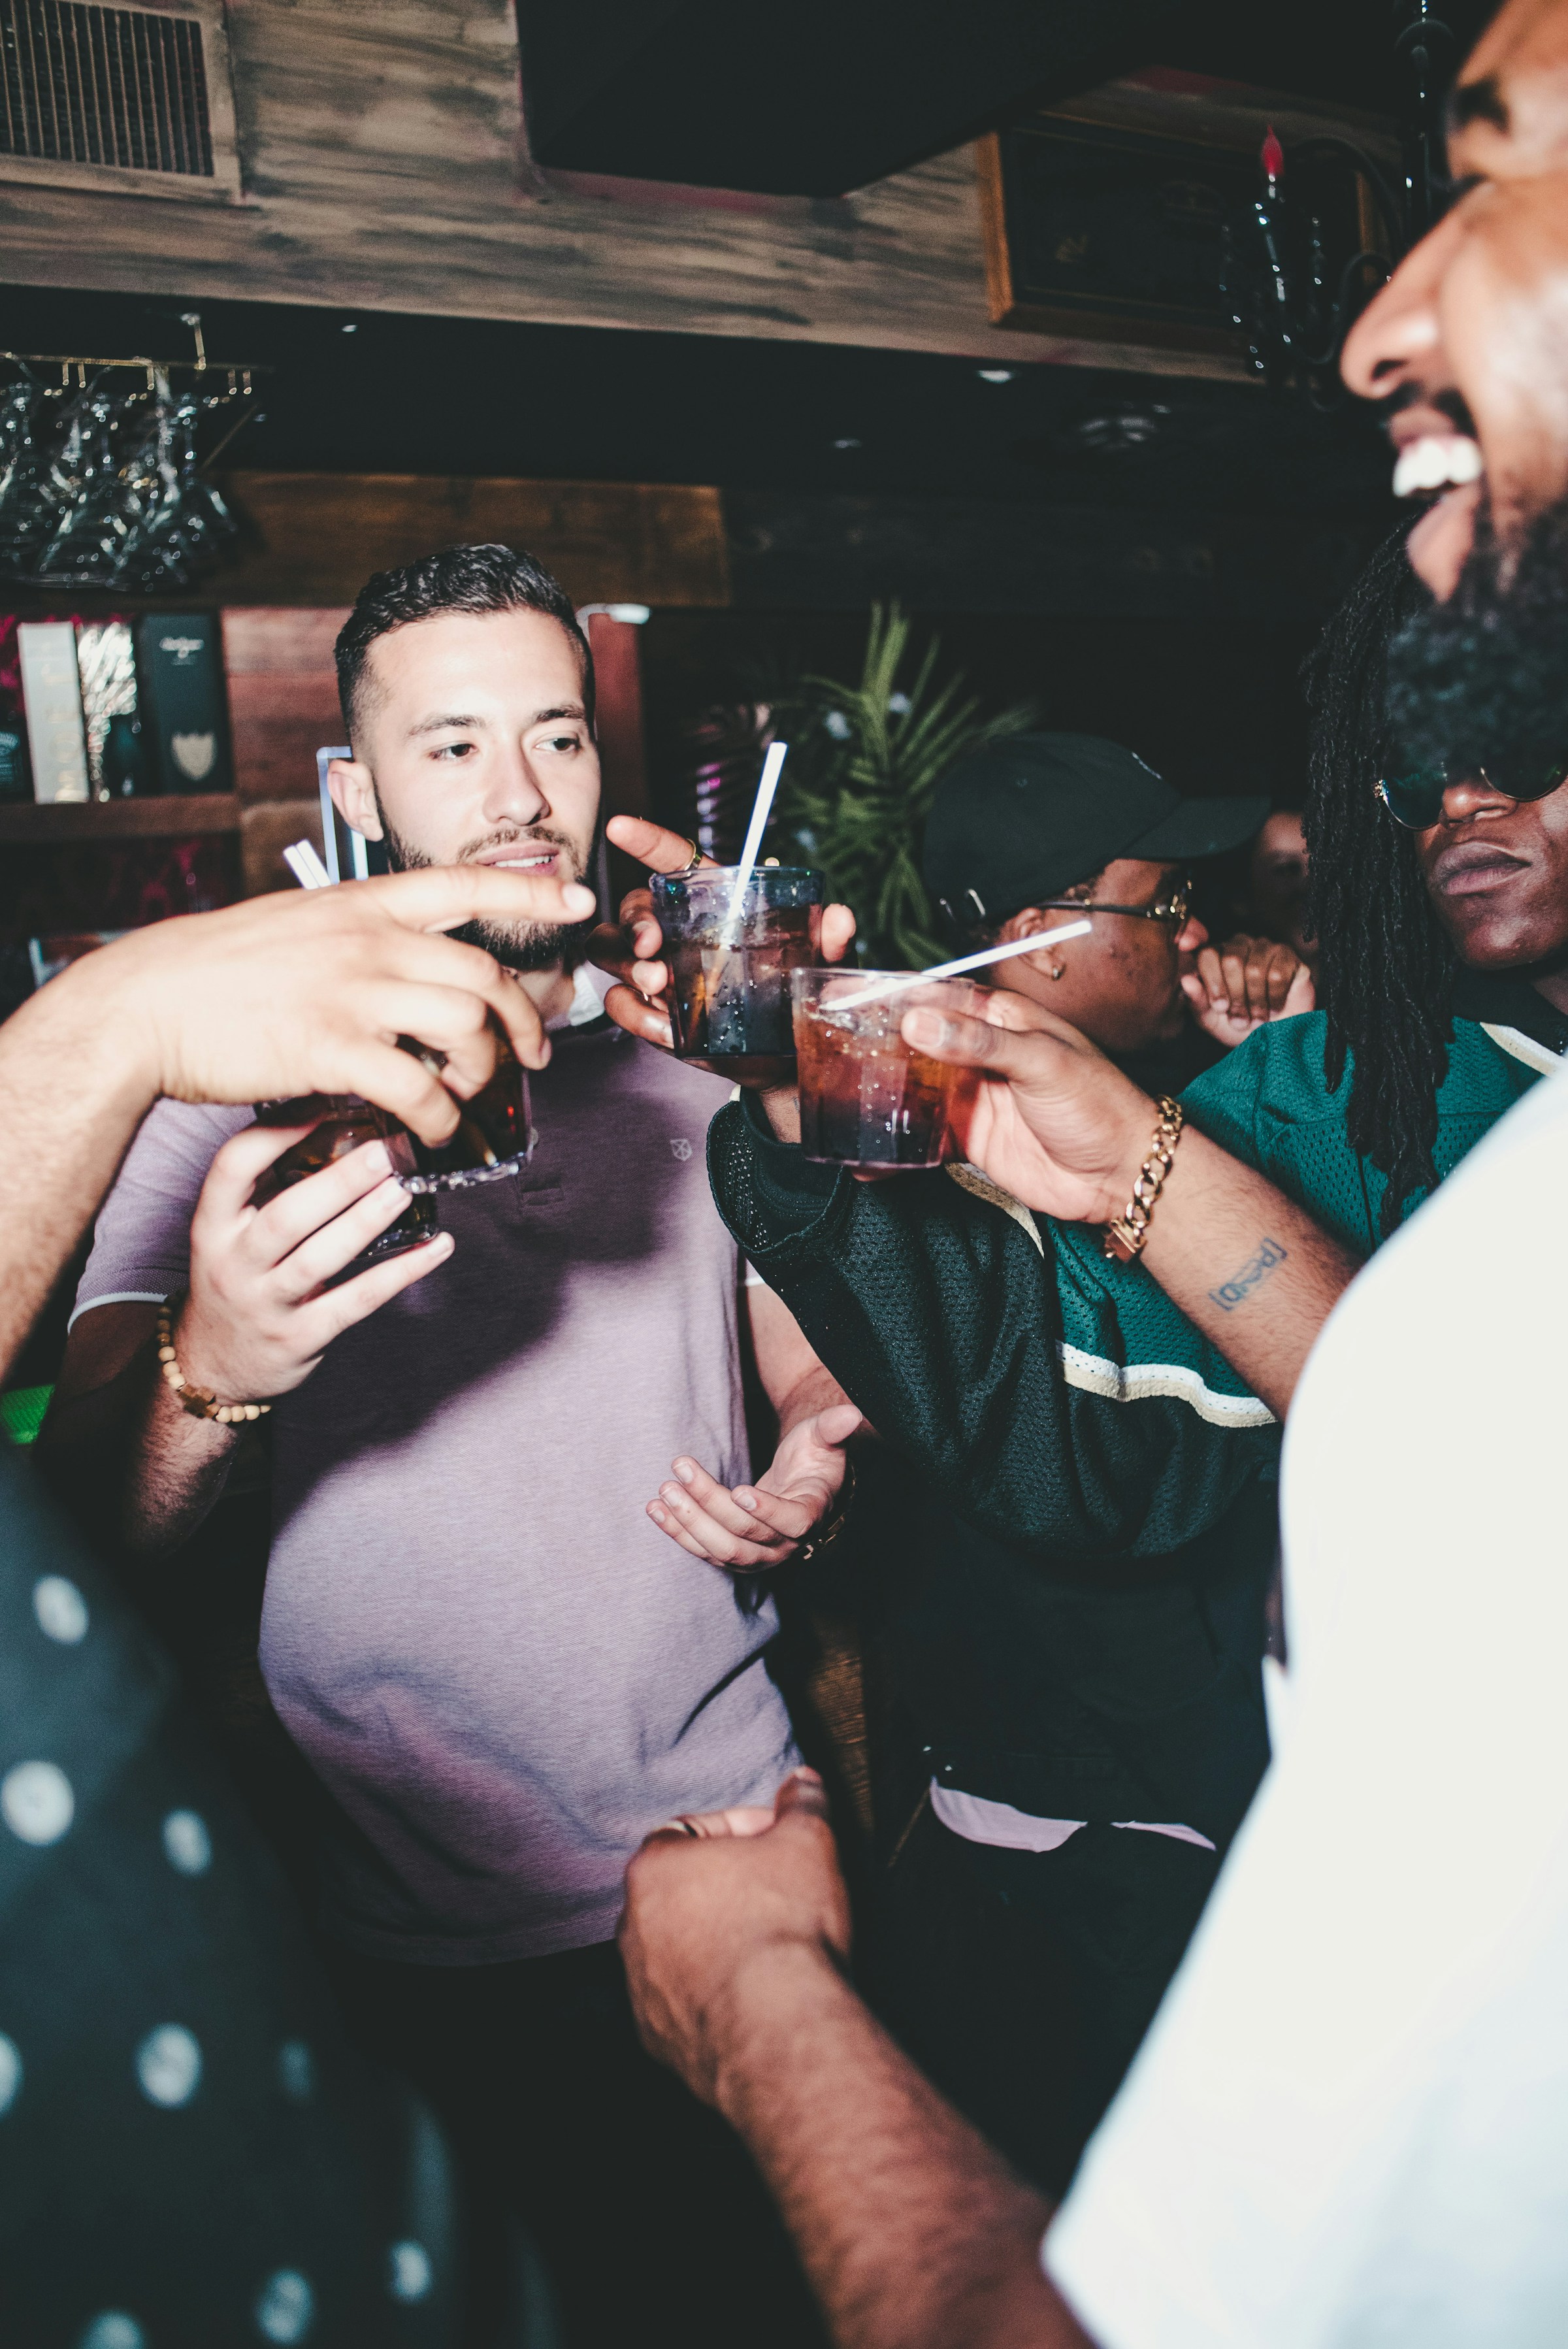 A group of men holding drinks | Source: Unsplash